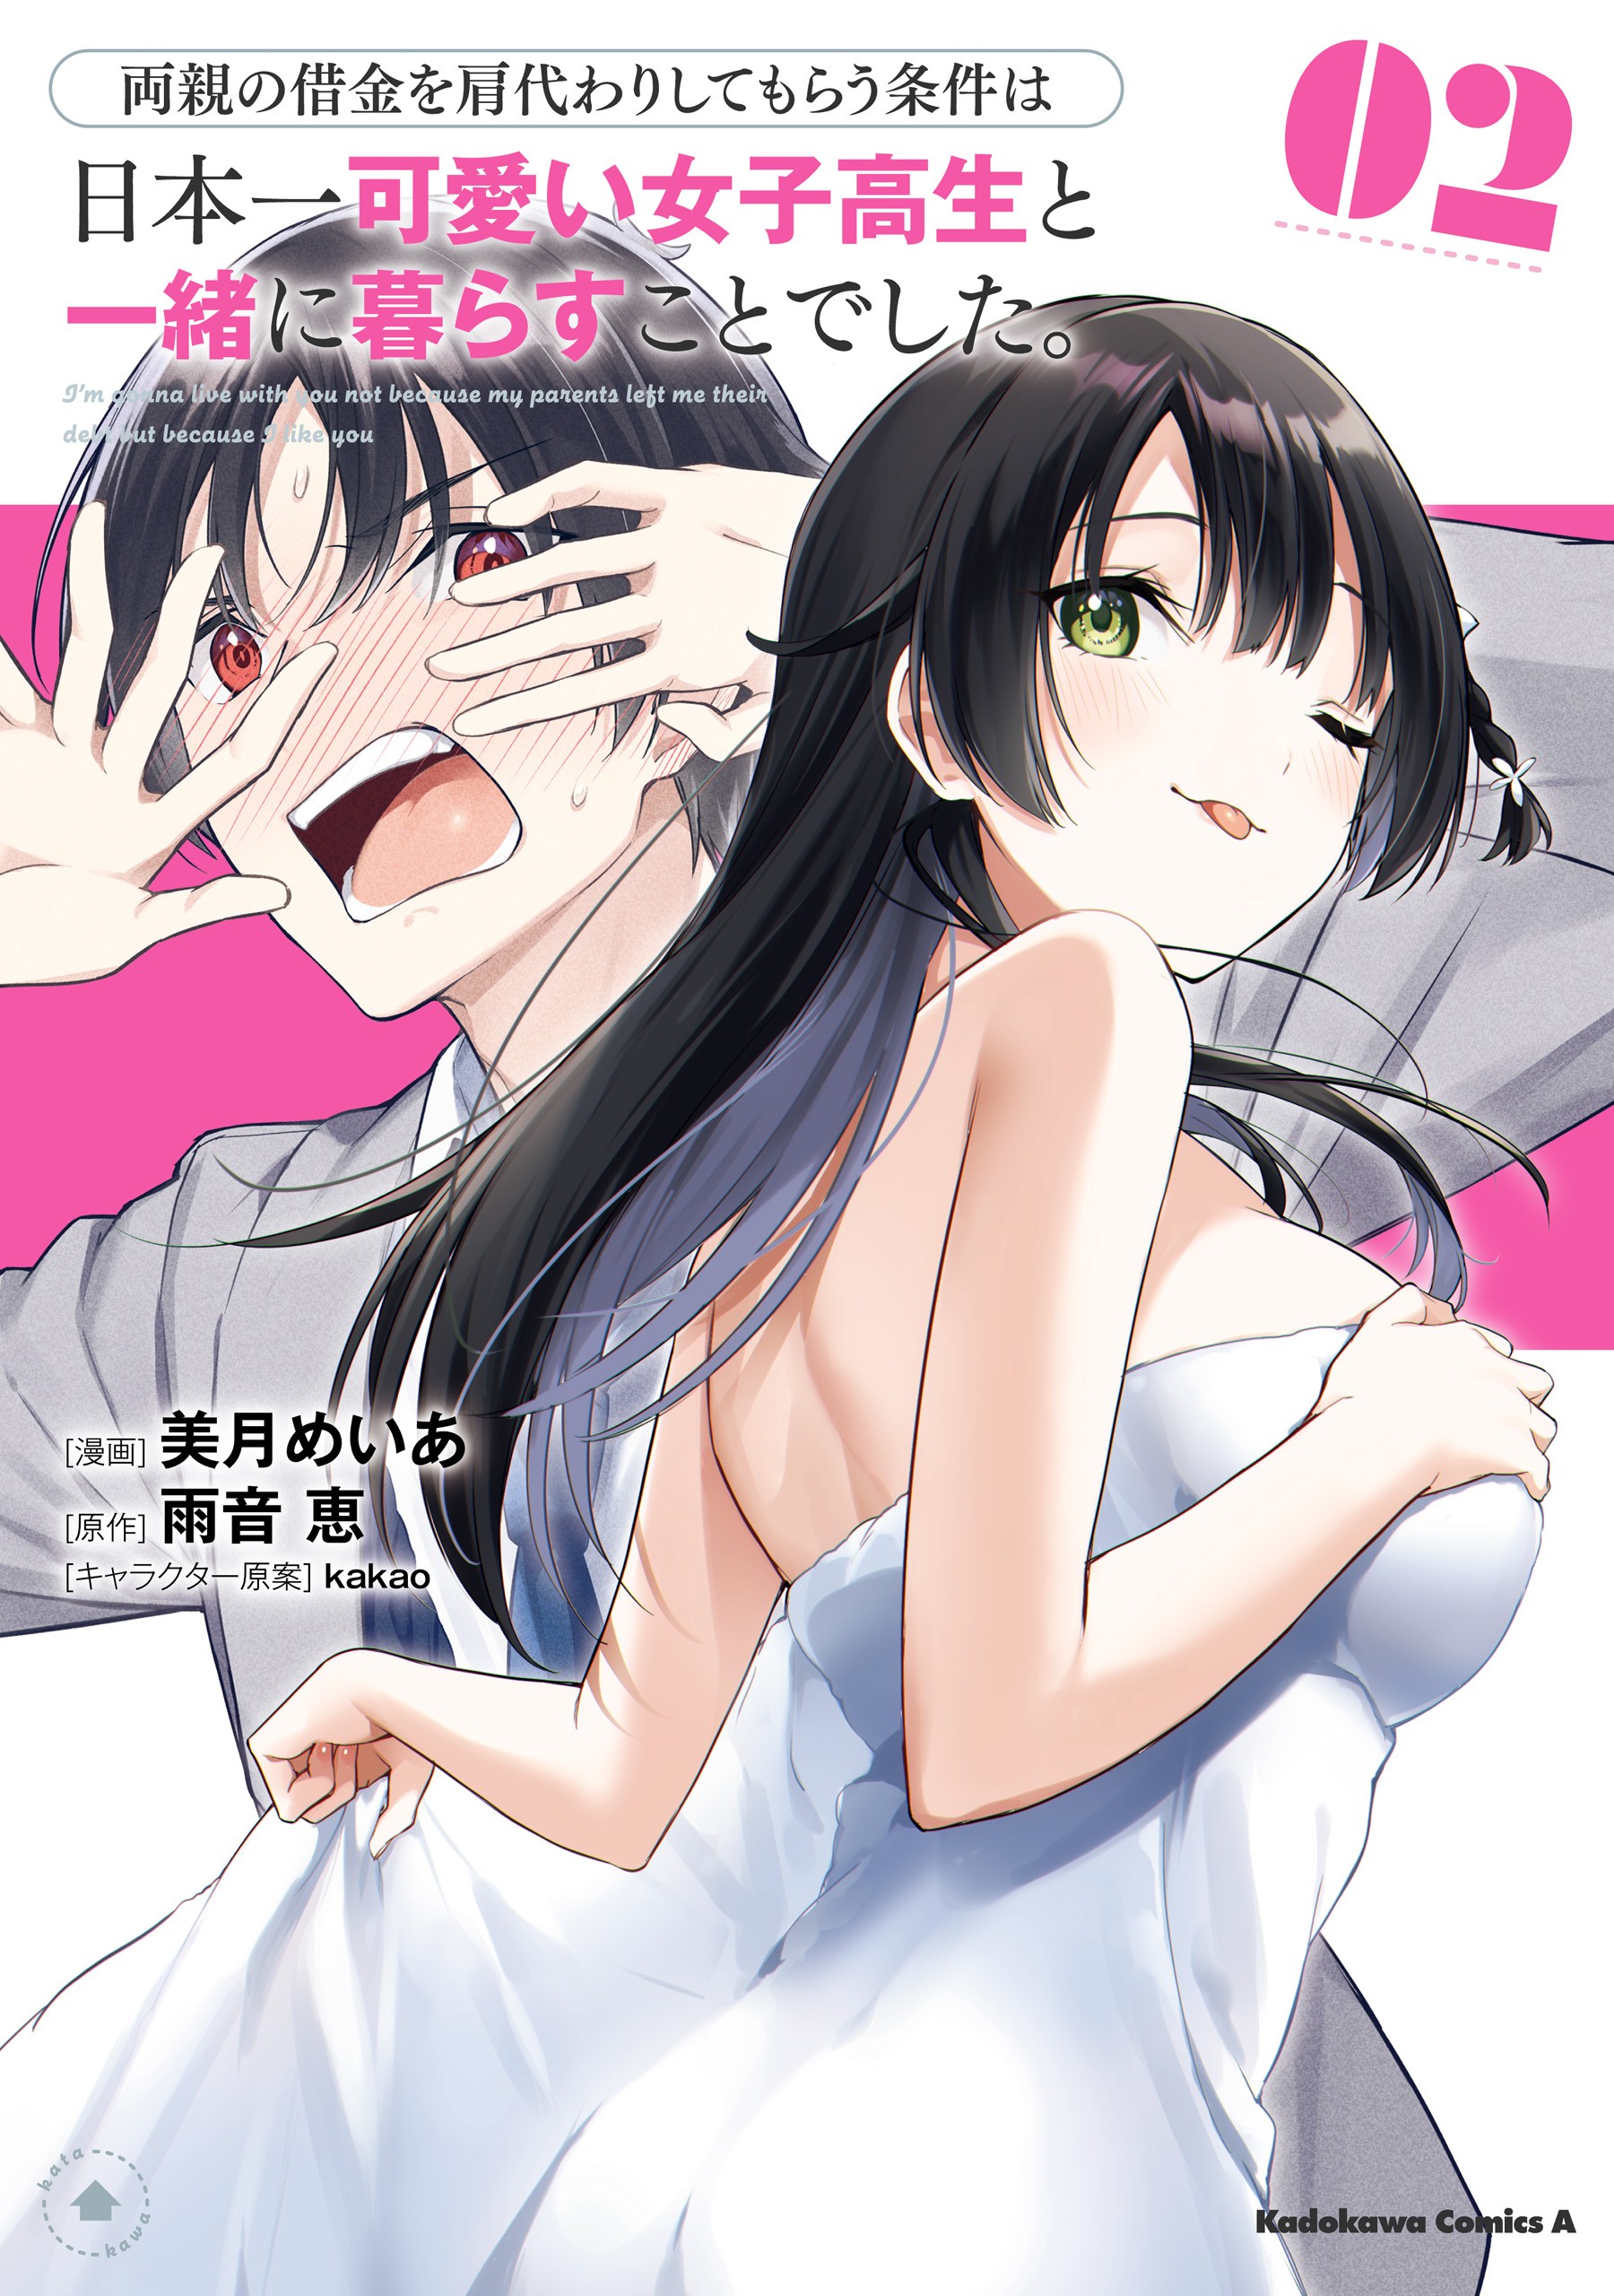 Manga Like Kakiuchi Koyoi Sakuhinshuu: Mishiranu Kyoukai